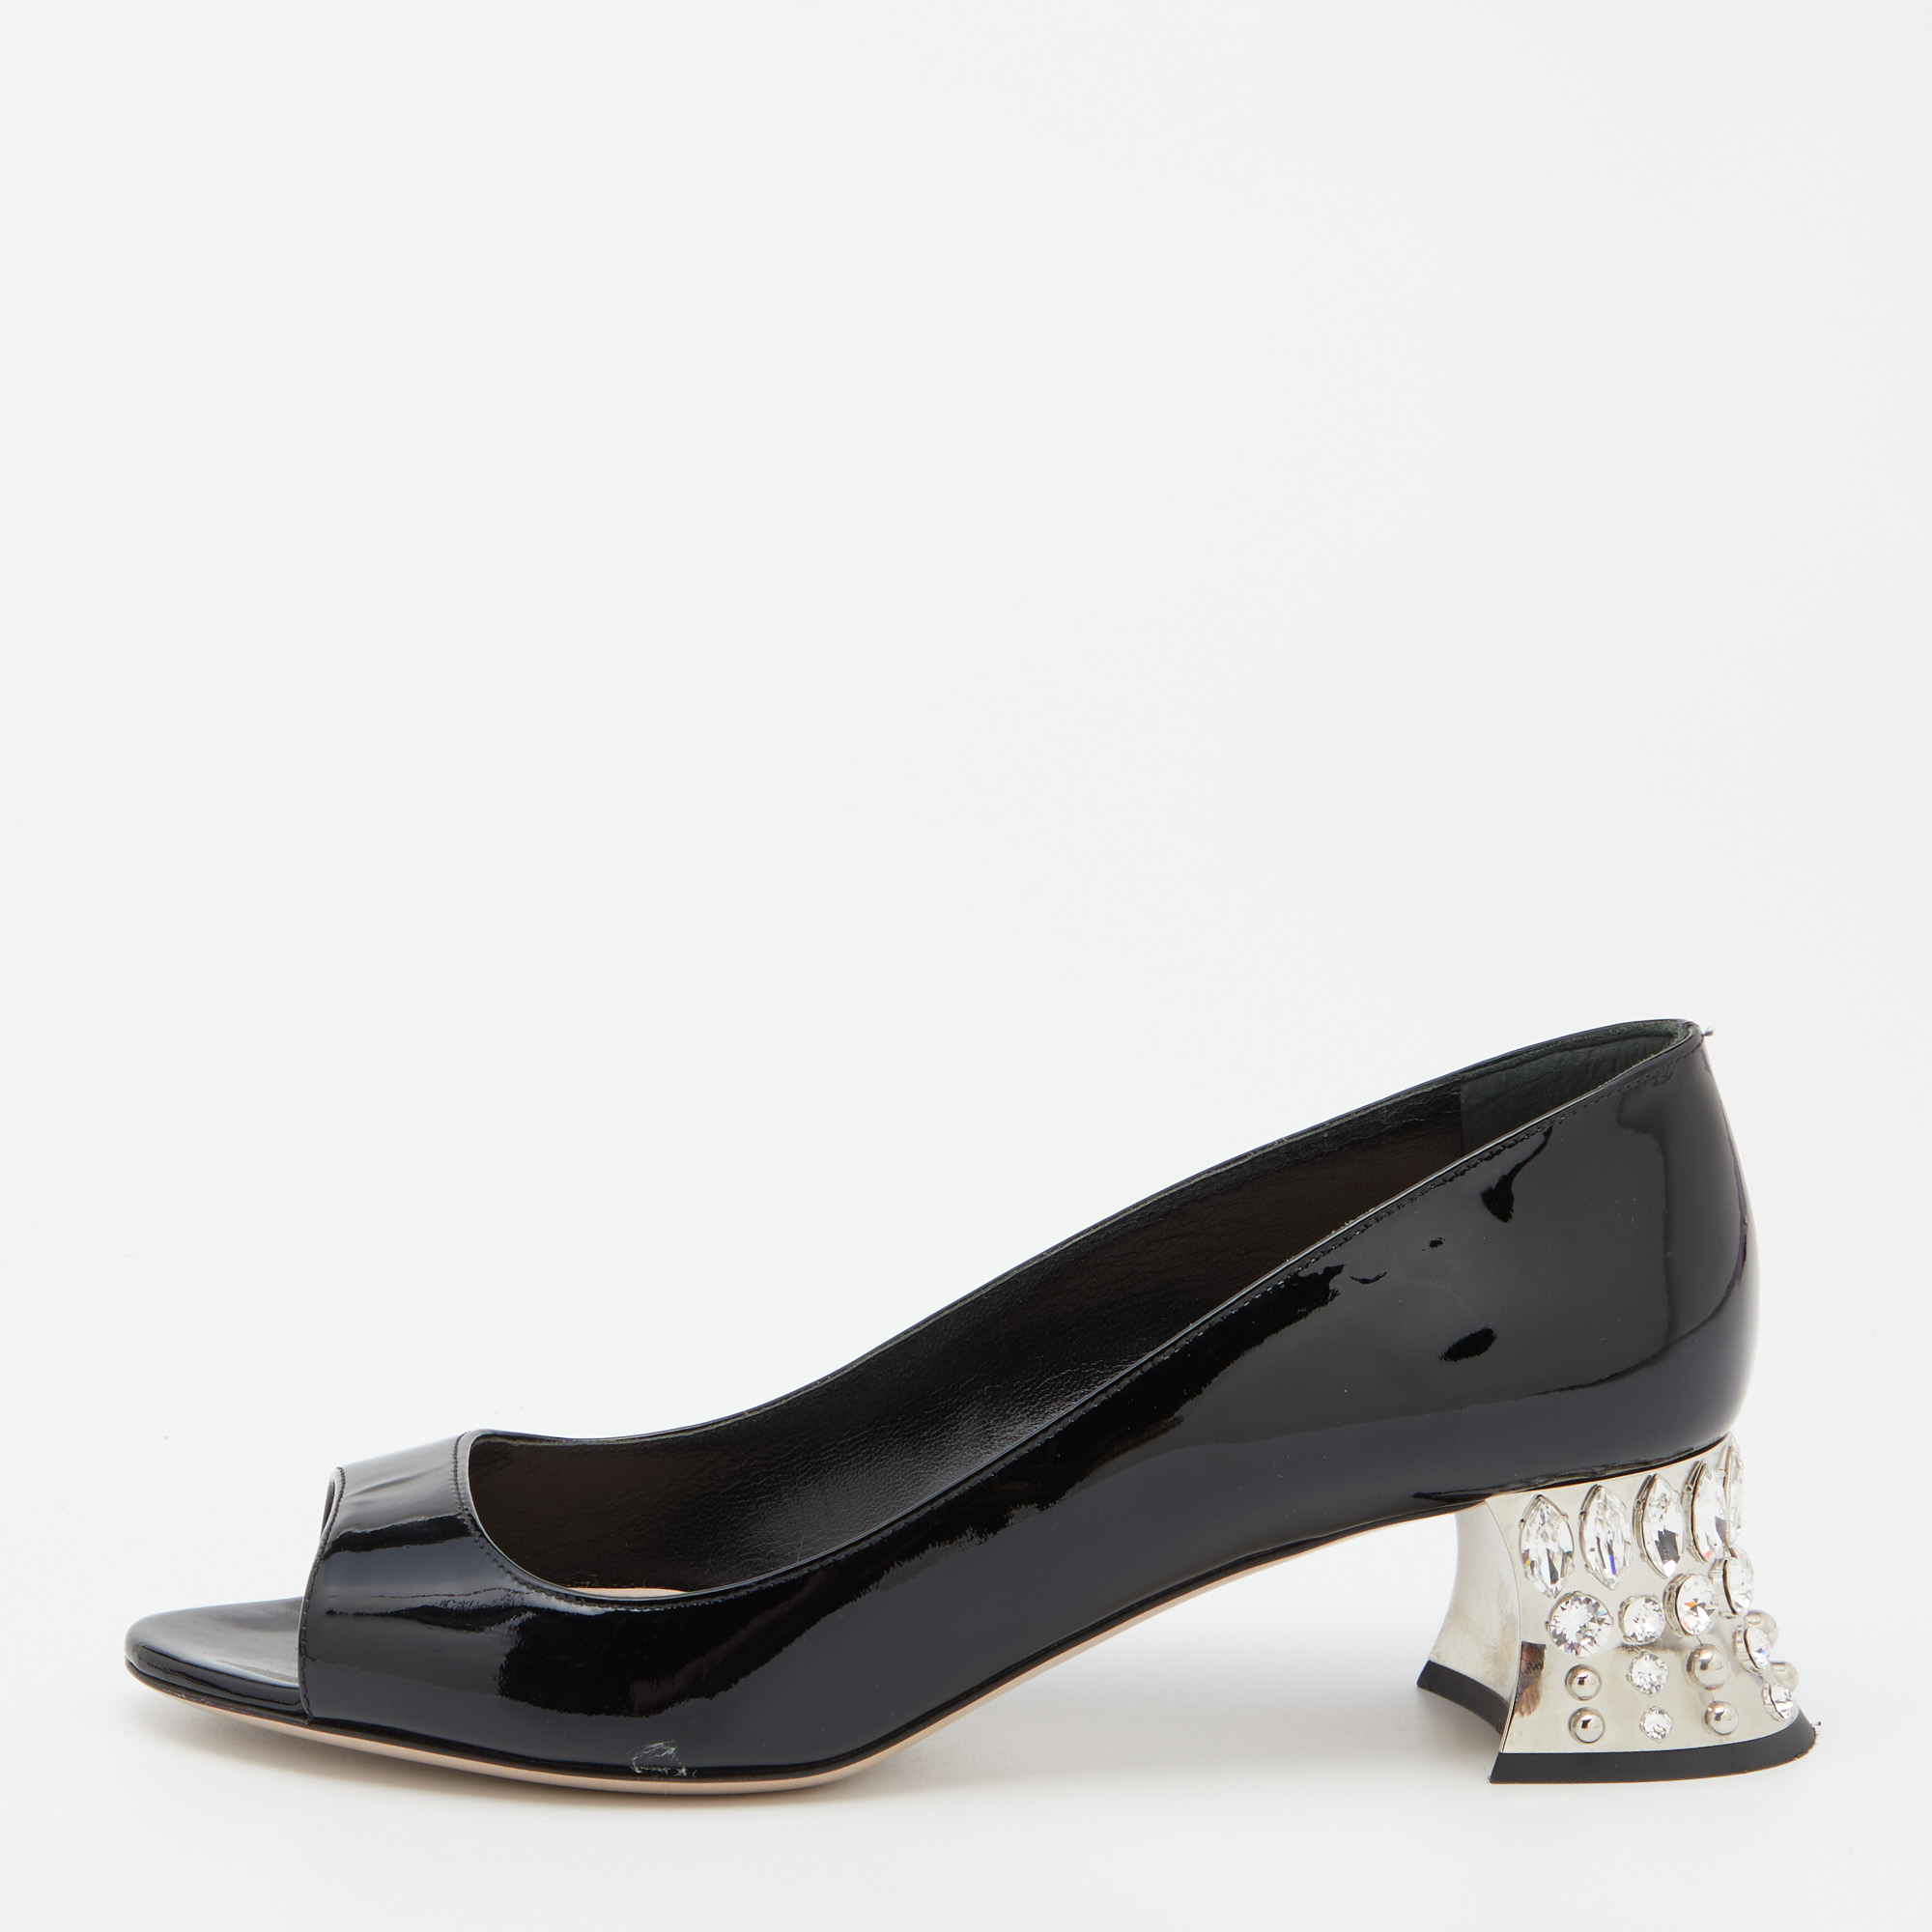 Miu Miu Black Patent Leather Crystal Embellished Block Heel Peep Toe Pumps Size 35.5